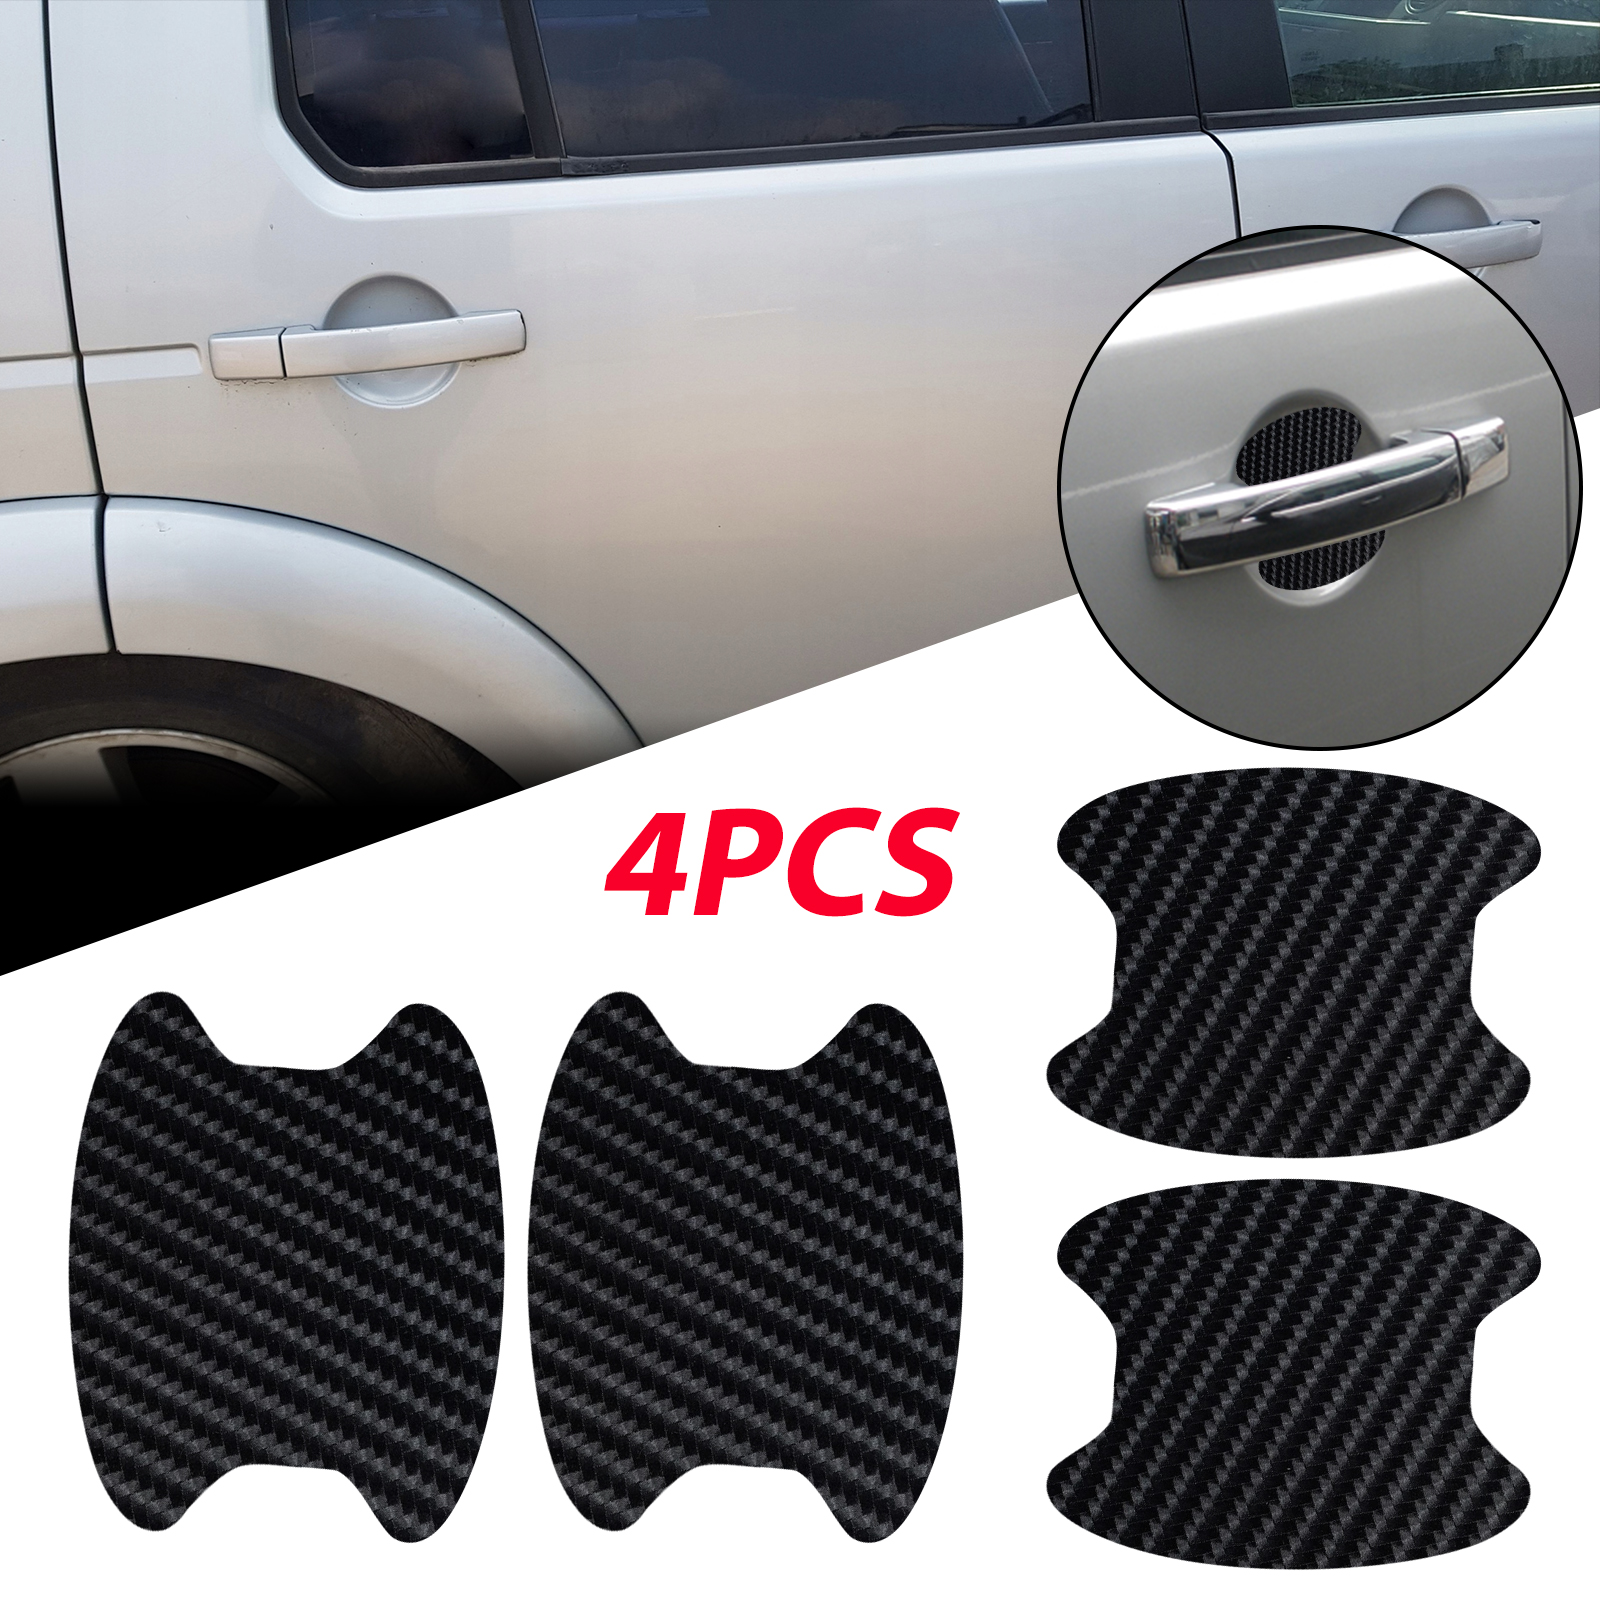 4 PCS Car Door Cup Handle Paint Scratch Protector Sticker 3D Carbon ...